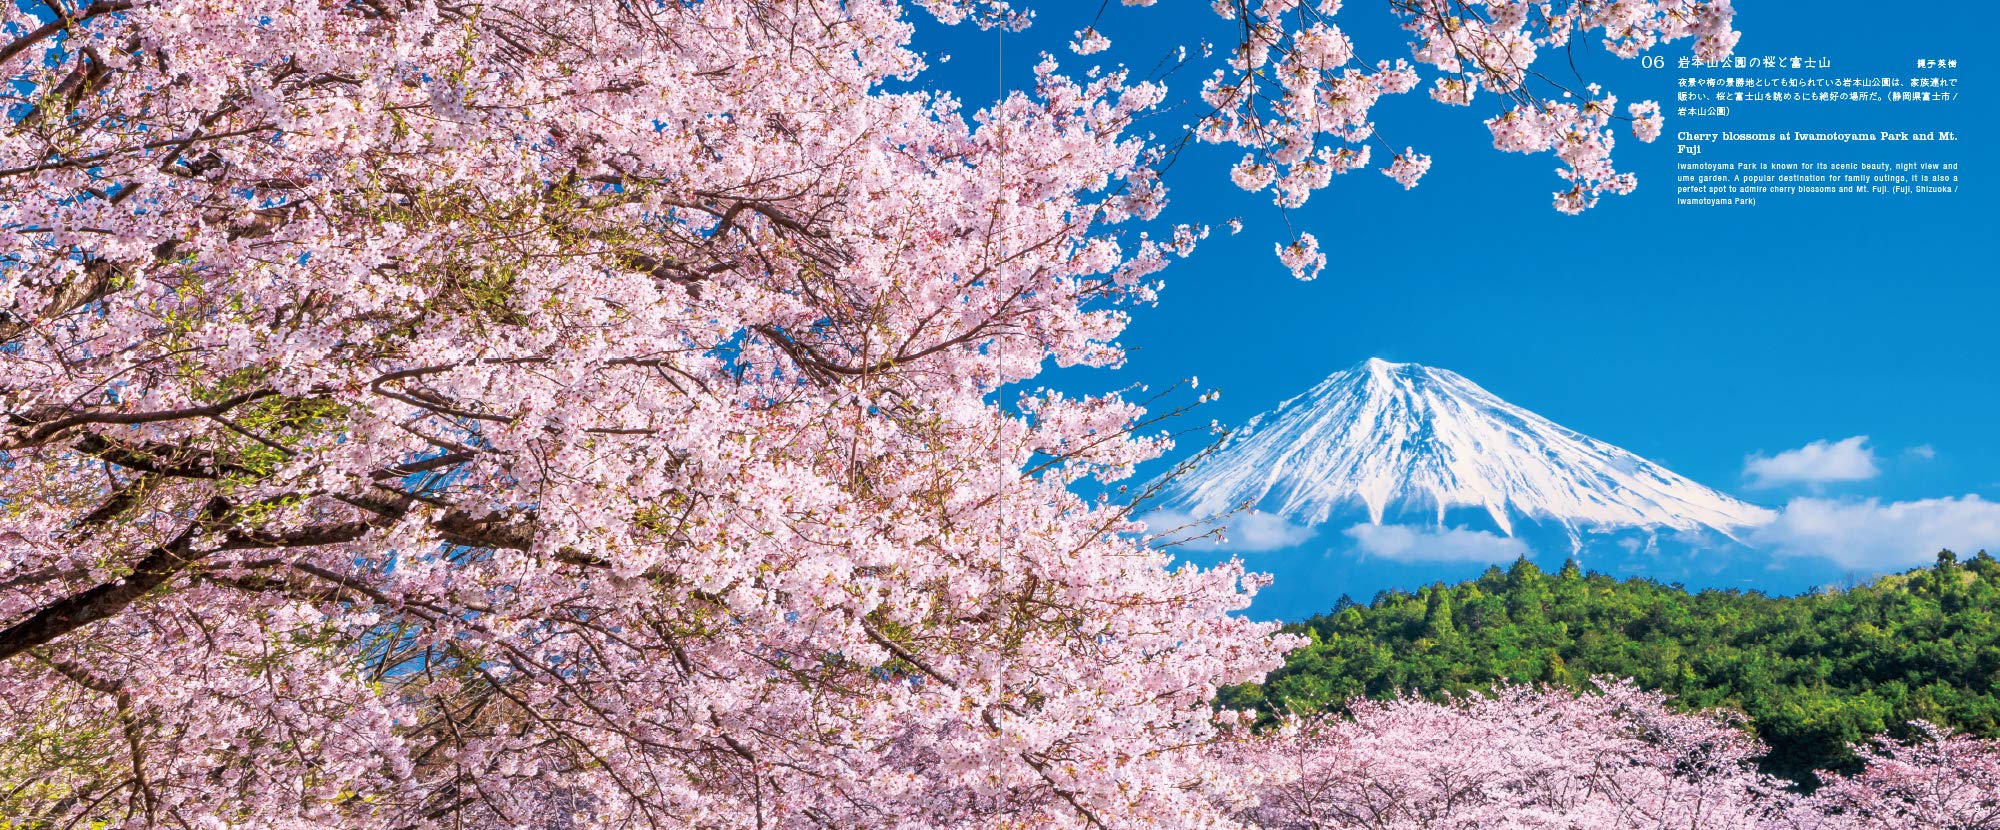 Eighty-eight views of Mt. Fuji | PIE International